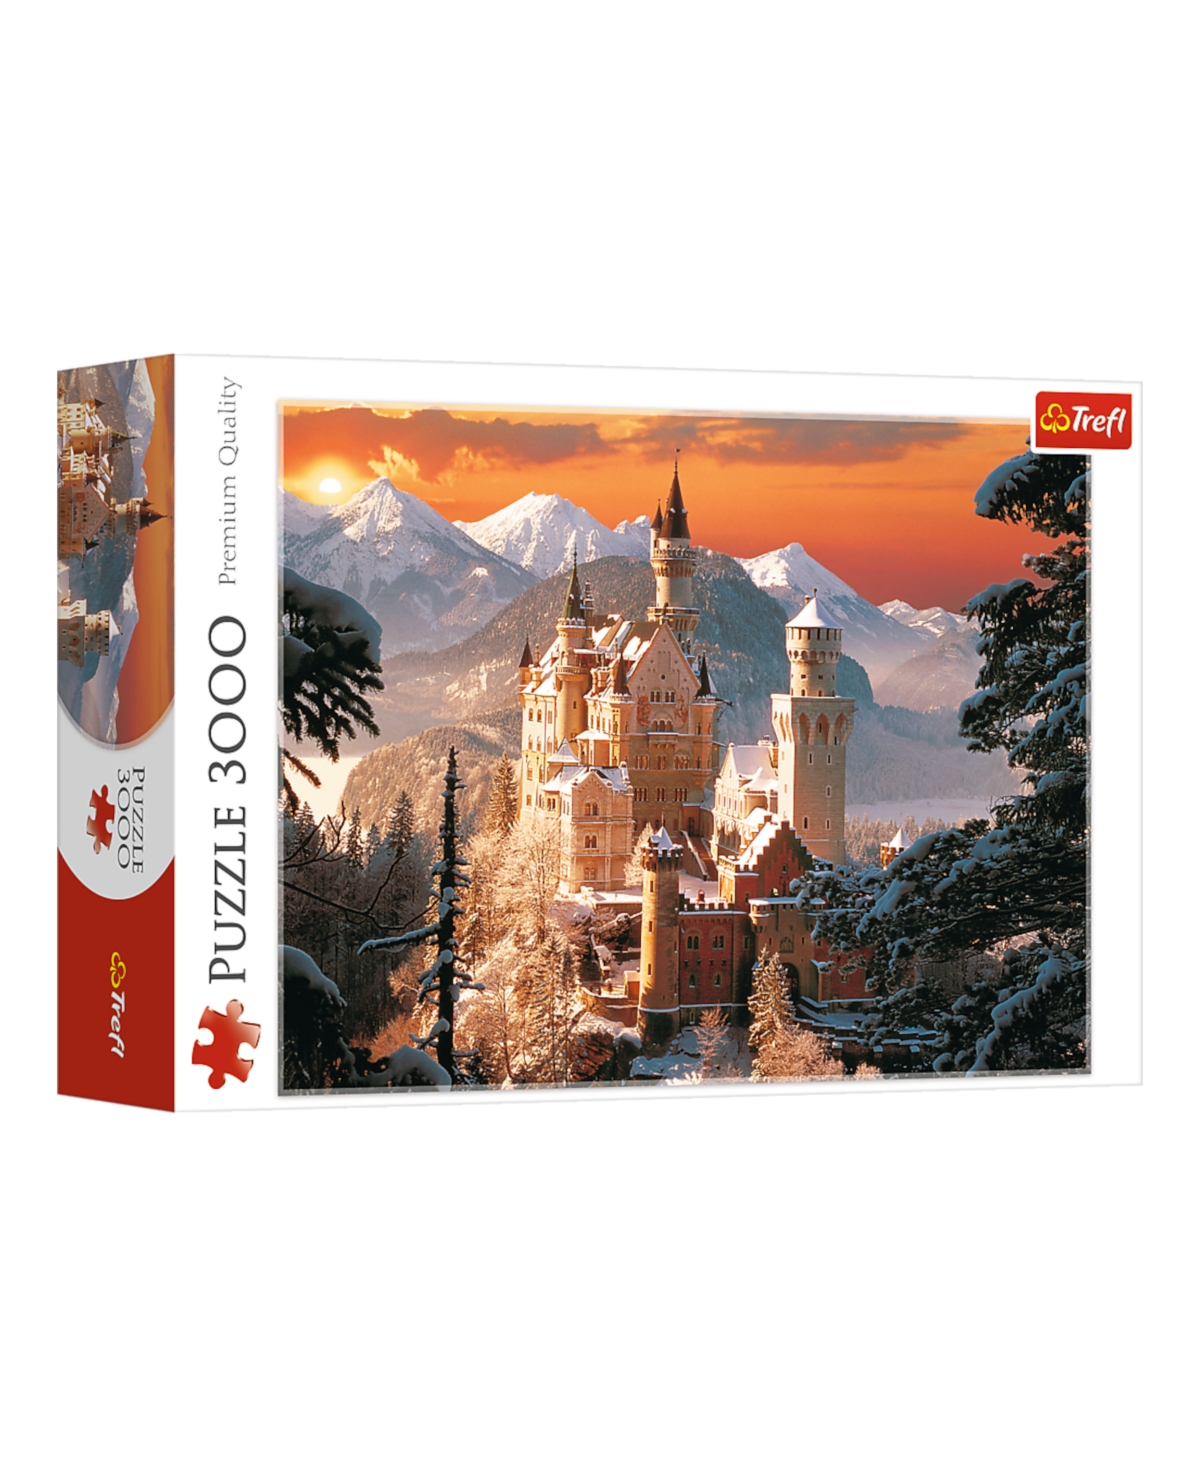 Trefl Red 3000 Piece Puzzle- Wintry Neuschwanstein Castle, Germany Or Kirch In Multi